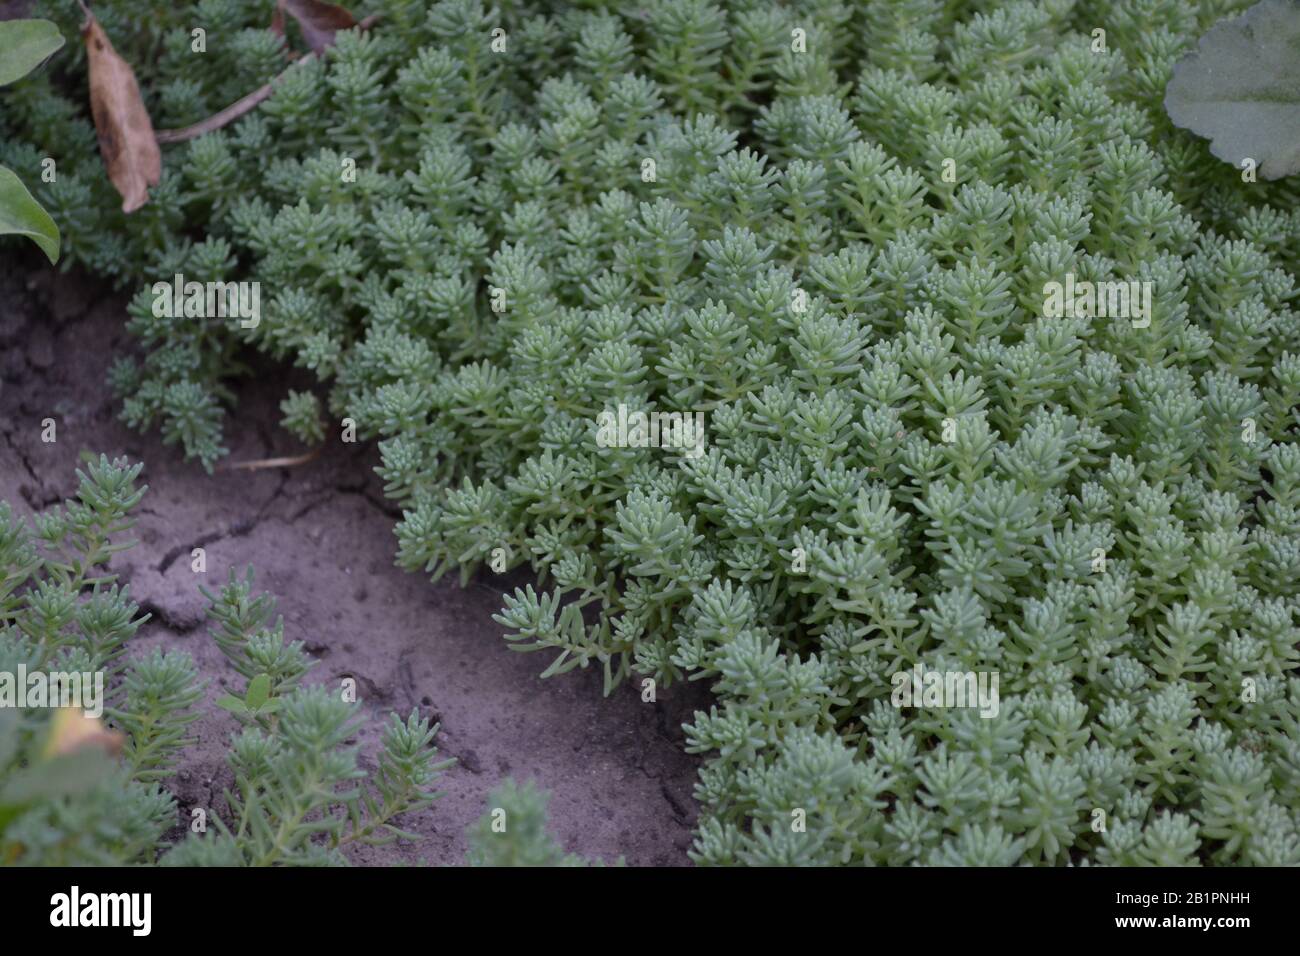 Stonecrop. Hare cabbage. Sedum. Green moss. Decorative grassy carpet. Green flower bed decoration. Garden. A beautiful tender plant. Horizontal Stock Photo